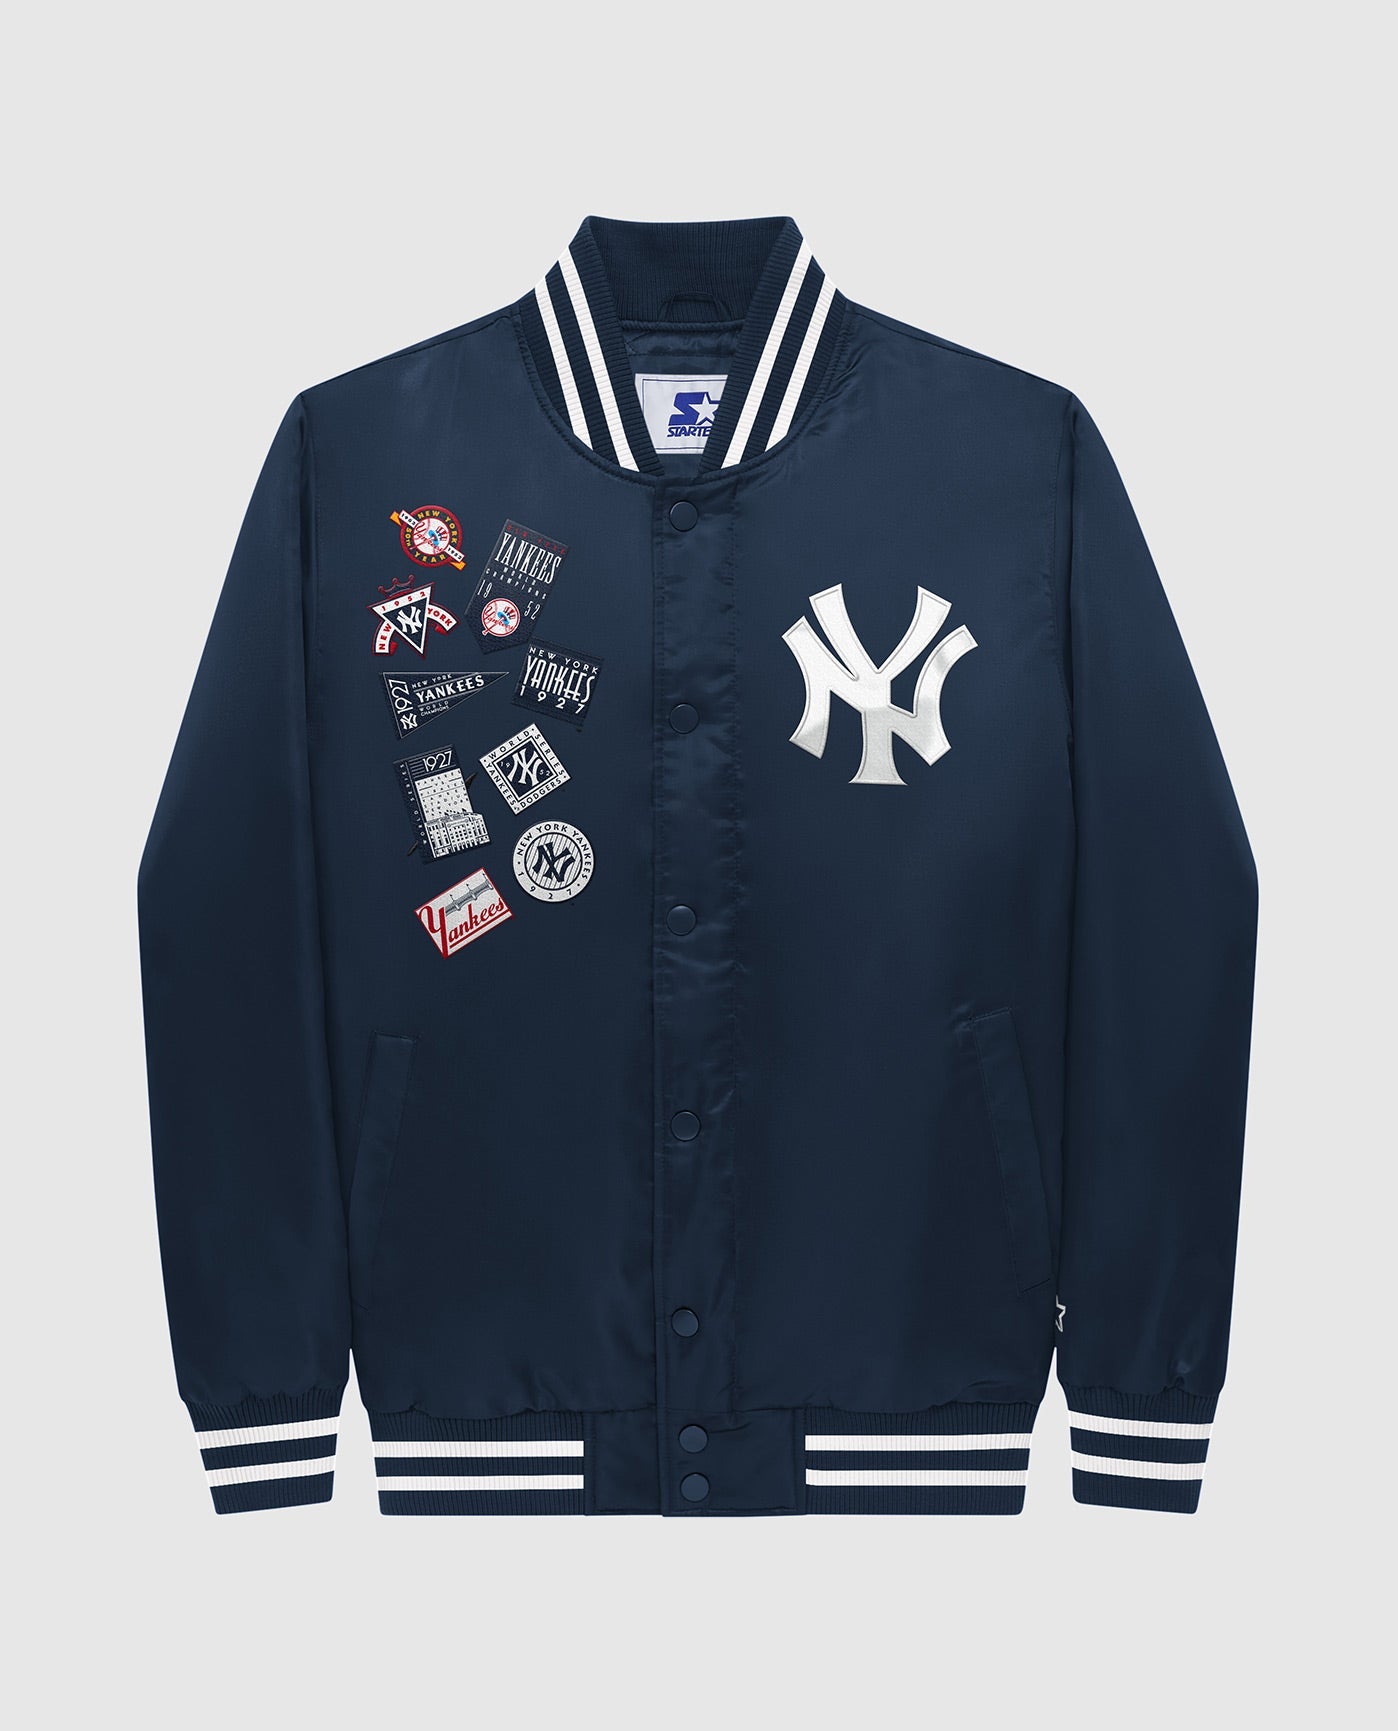 New York Yankees World Series MLB Navy Satin Jacket - Maker of Jacket